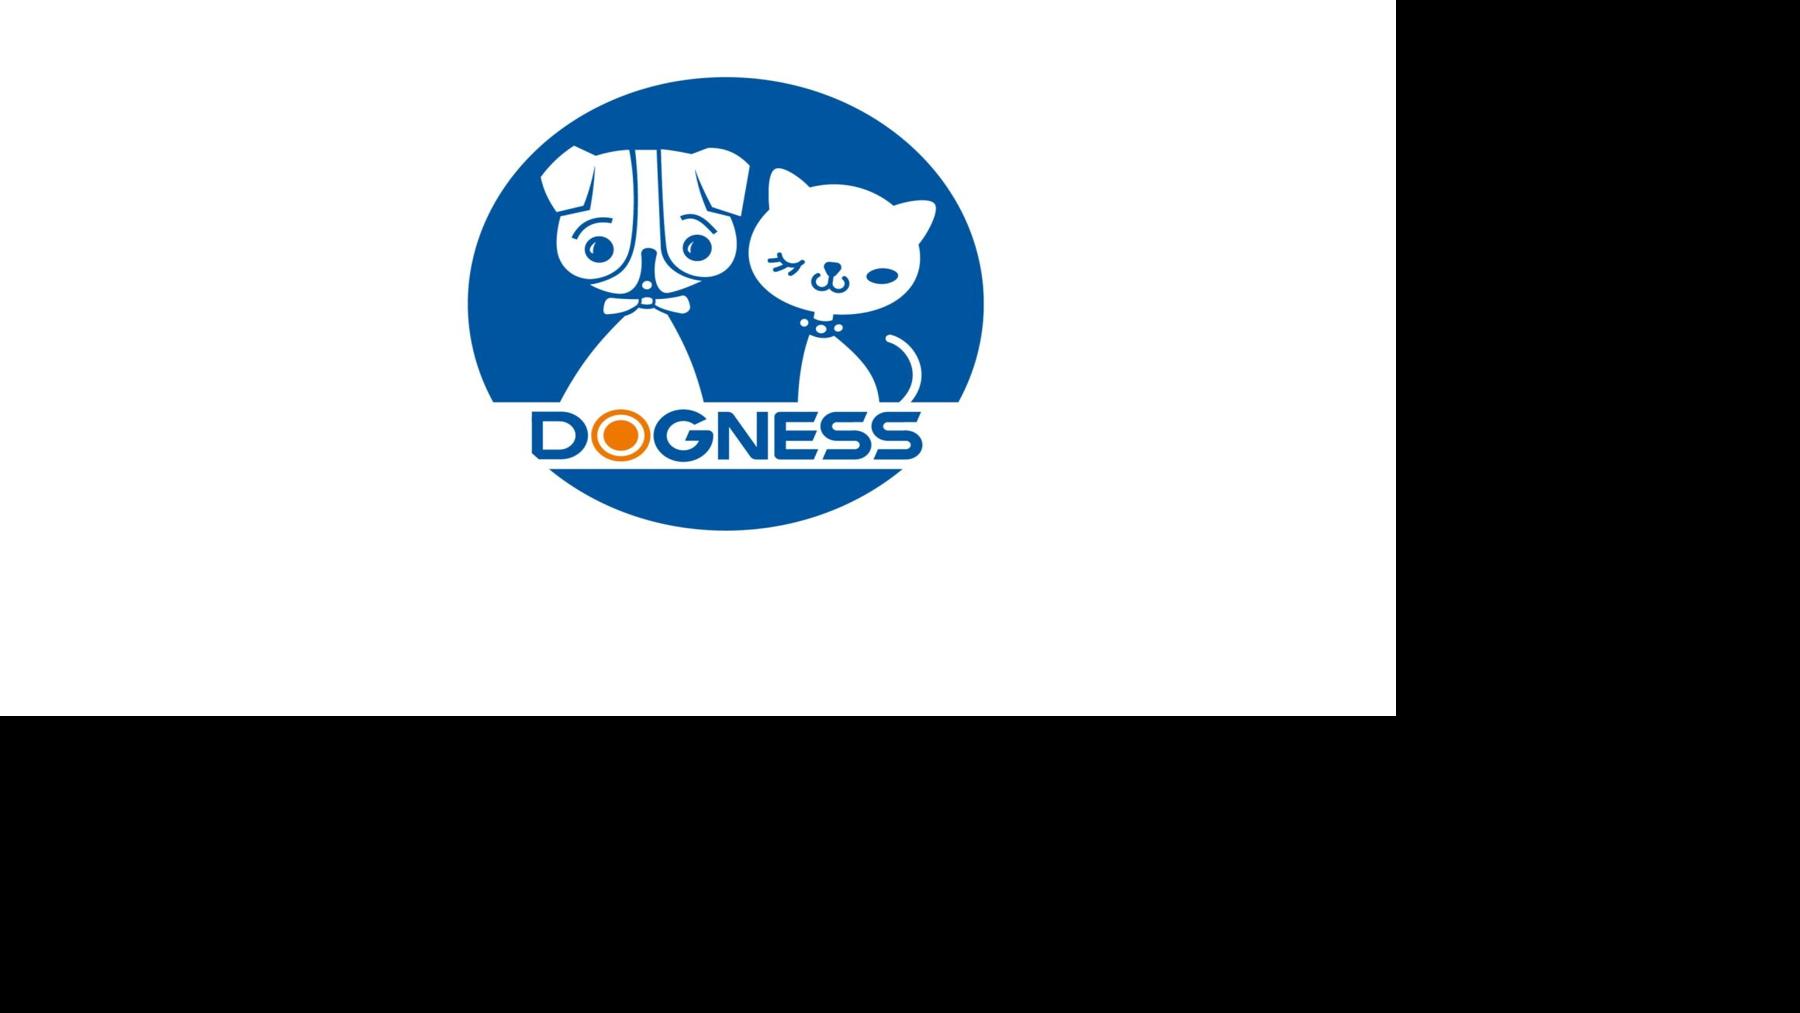 Dogness Announces Entry into US$5.0 Million Private Placement